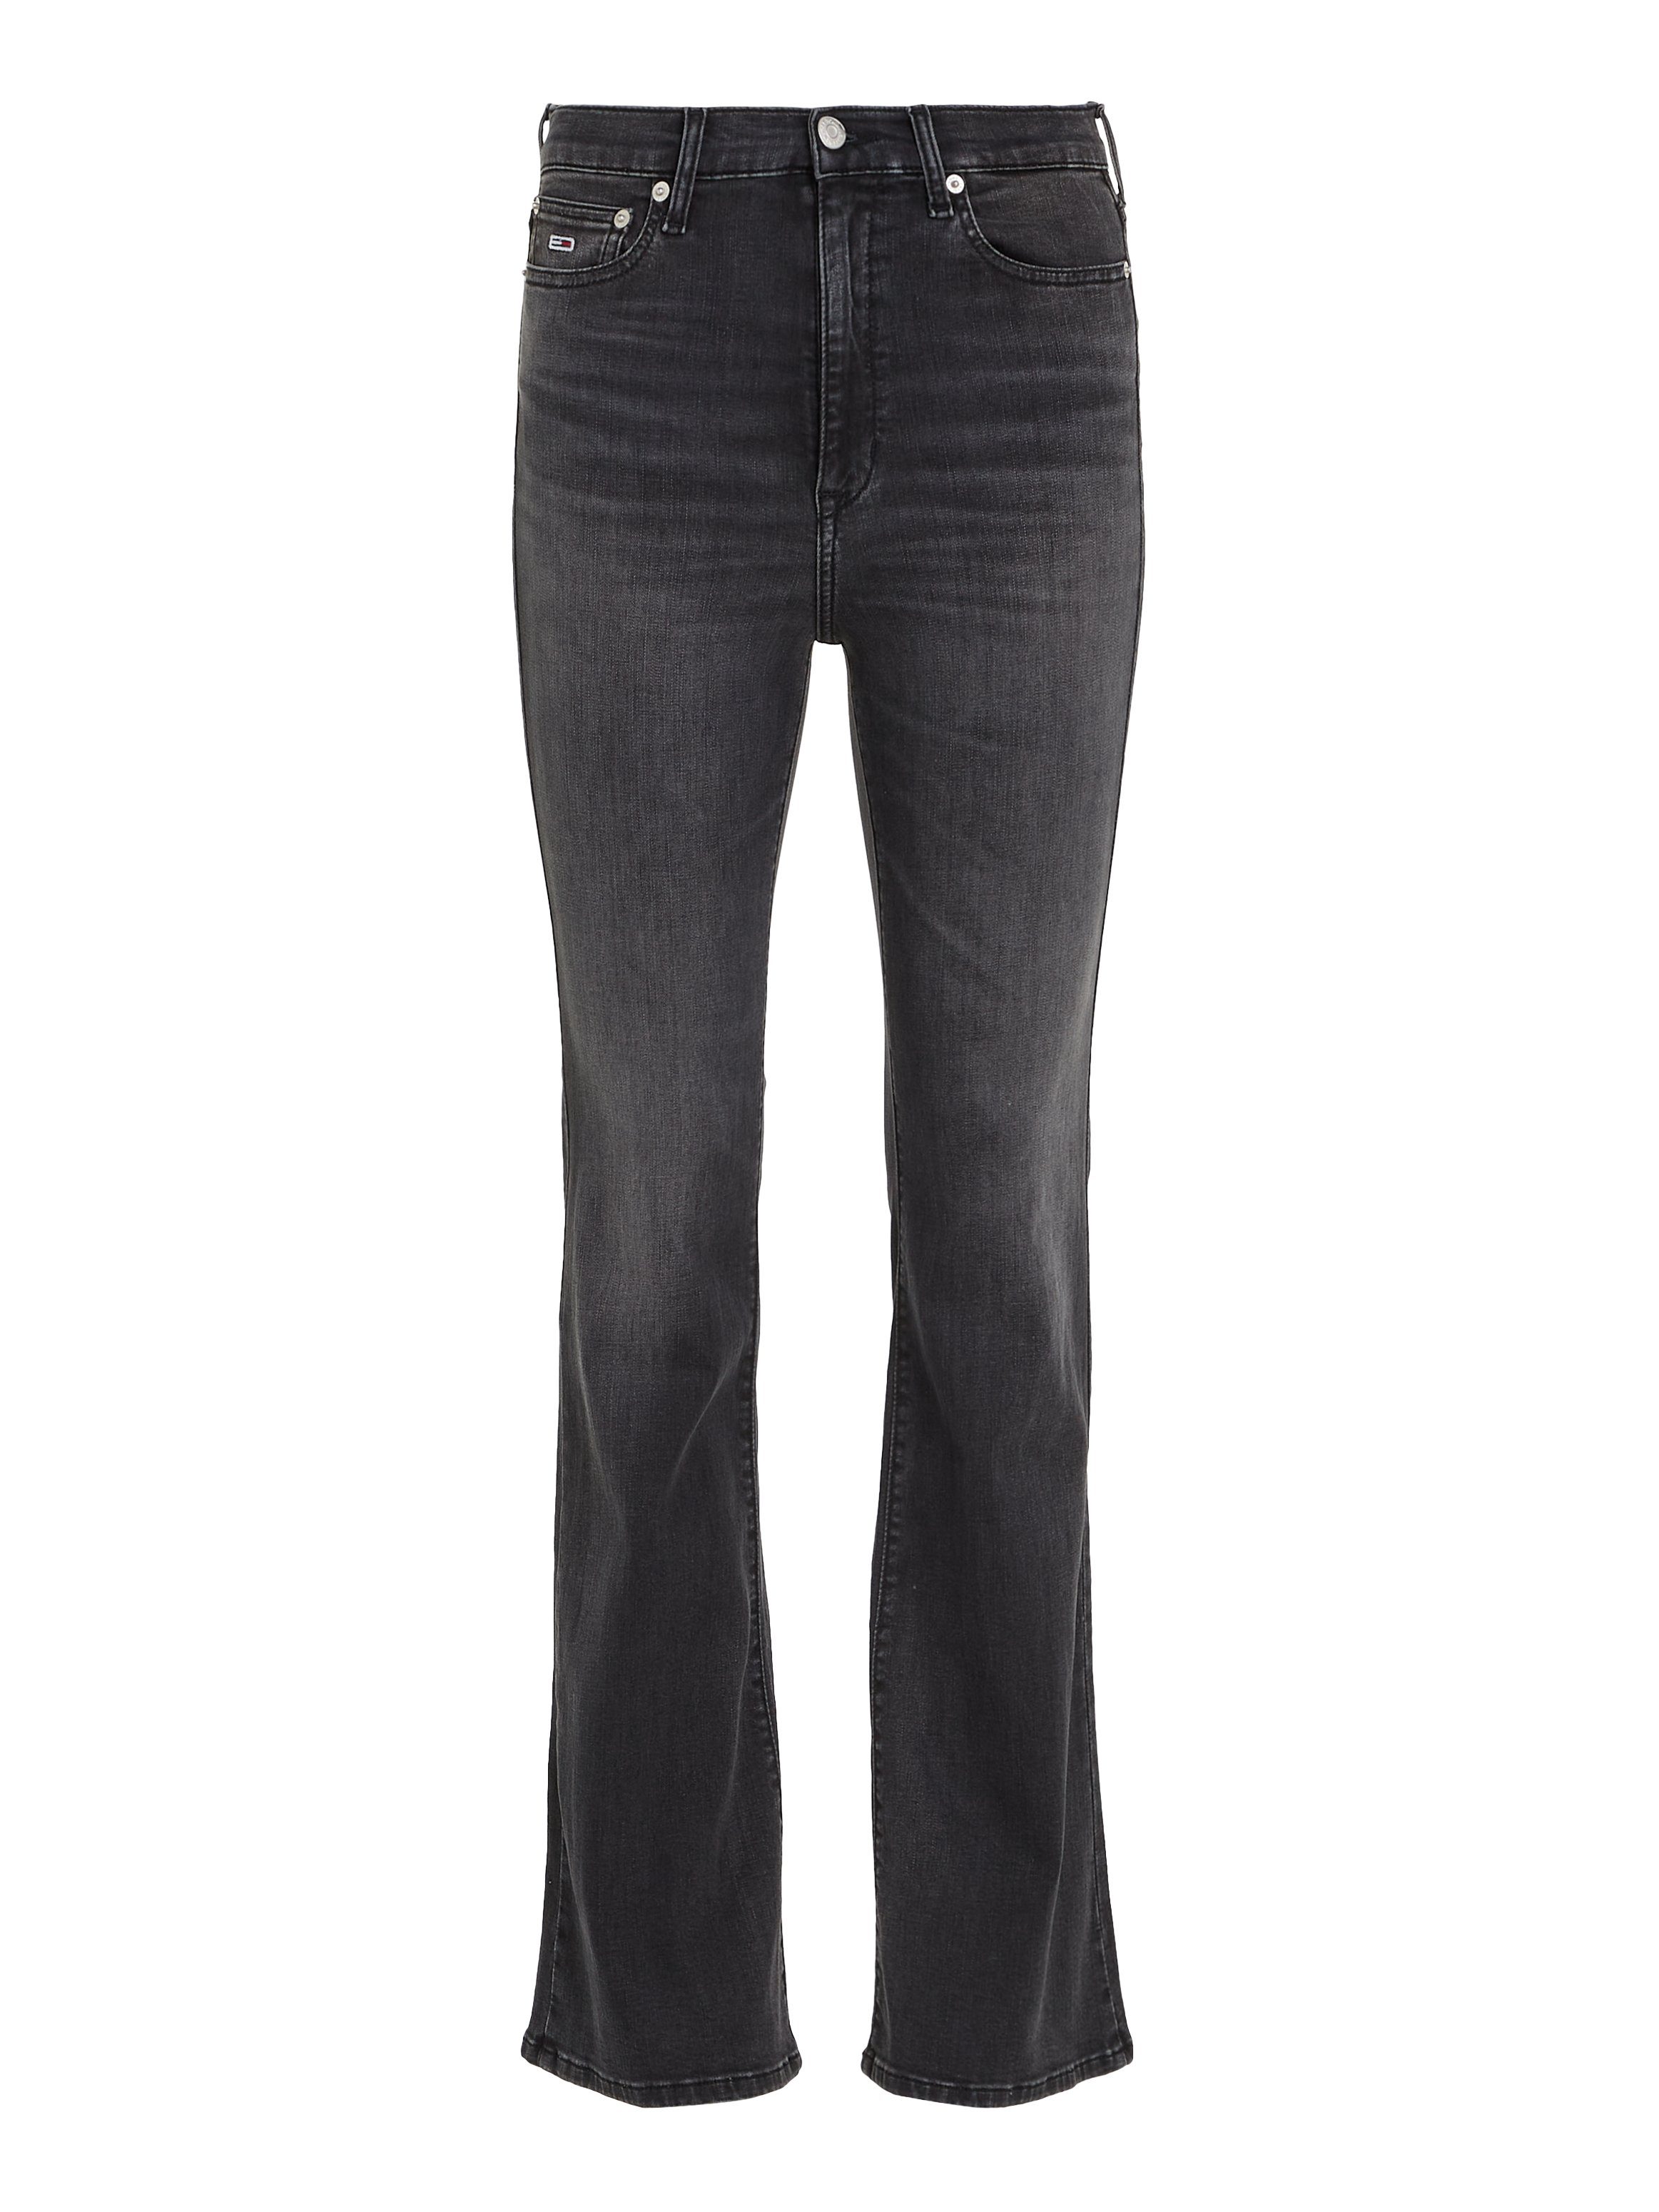 Jeans Bequeme Sylvia Tommy mit Markenlabel Jeans black30